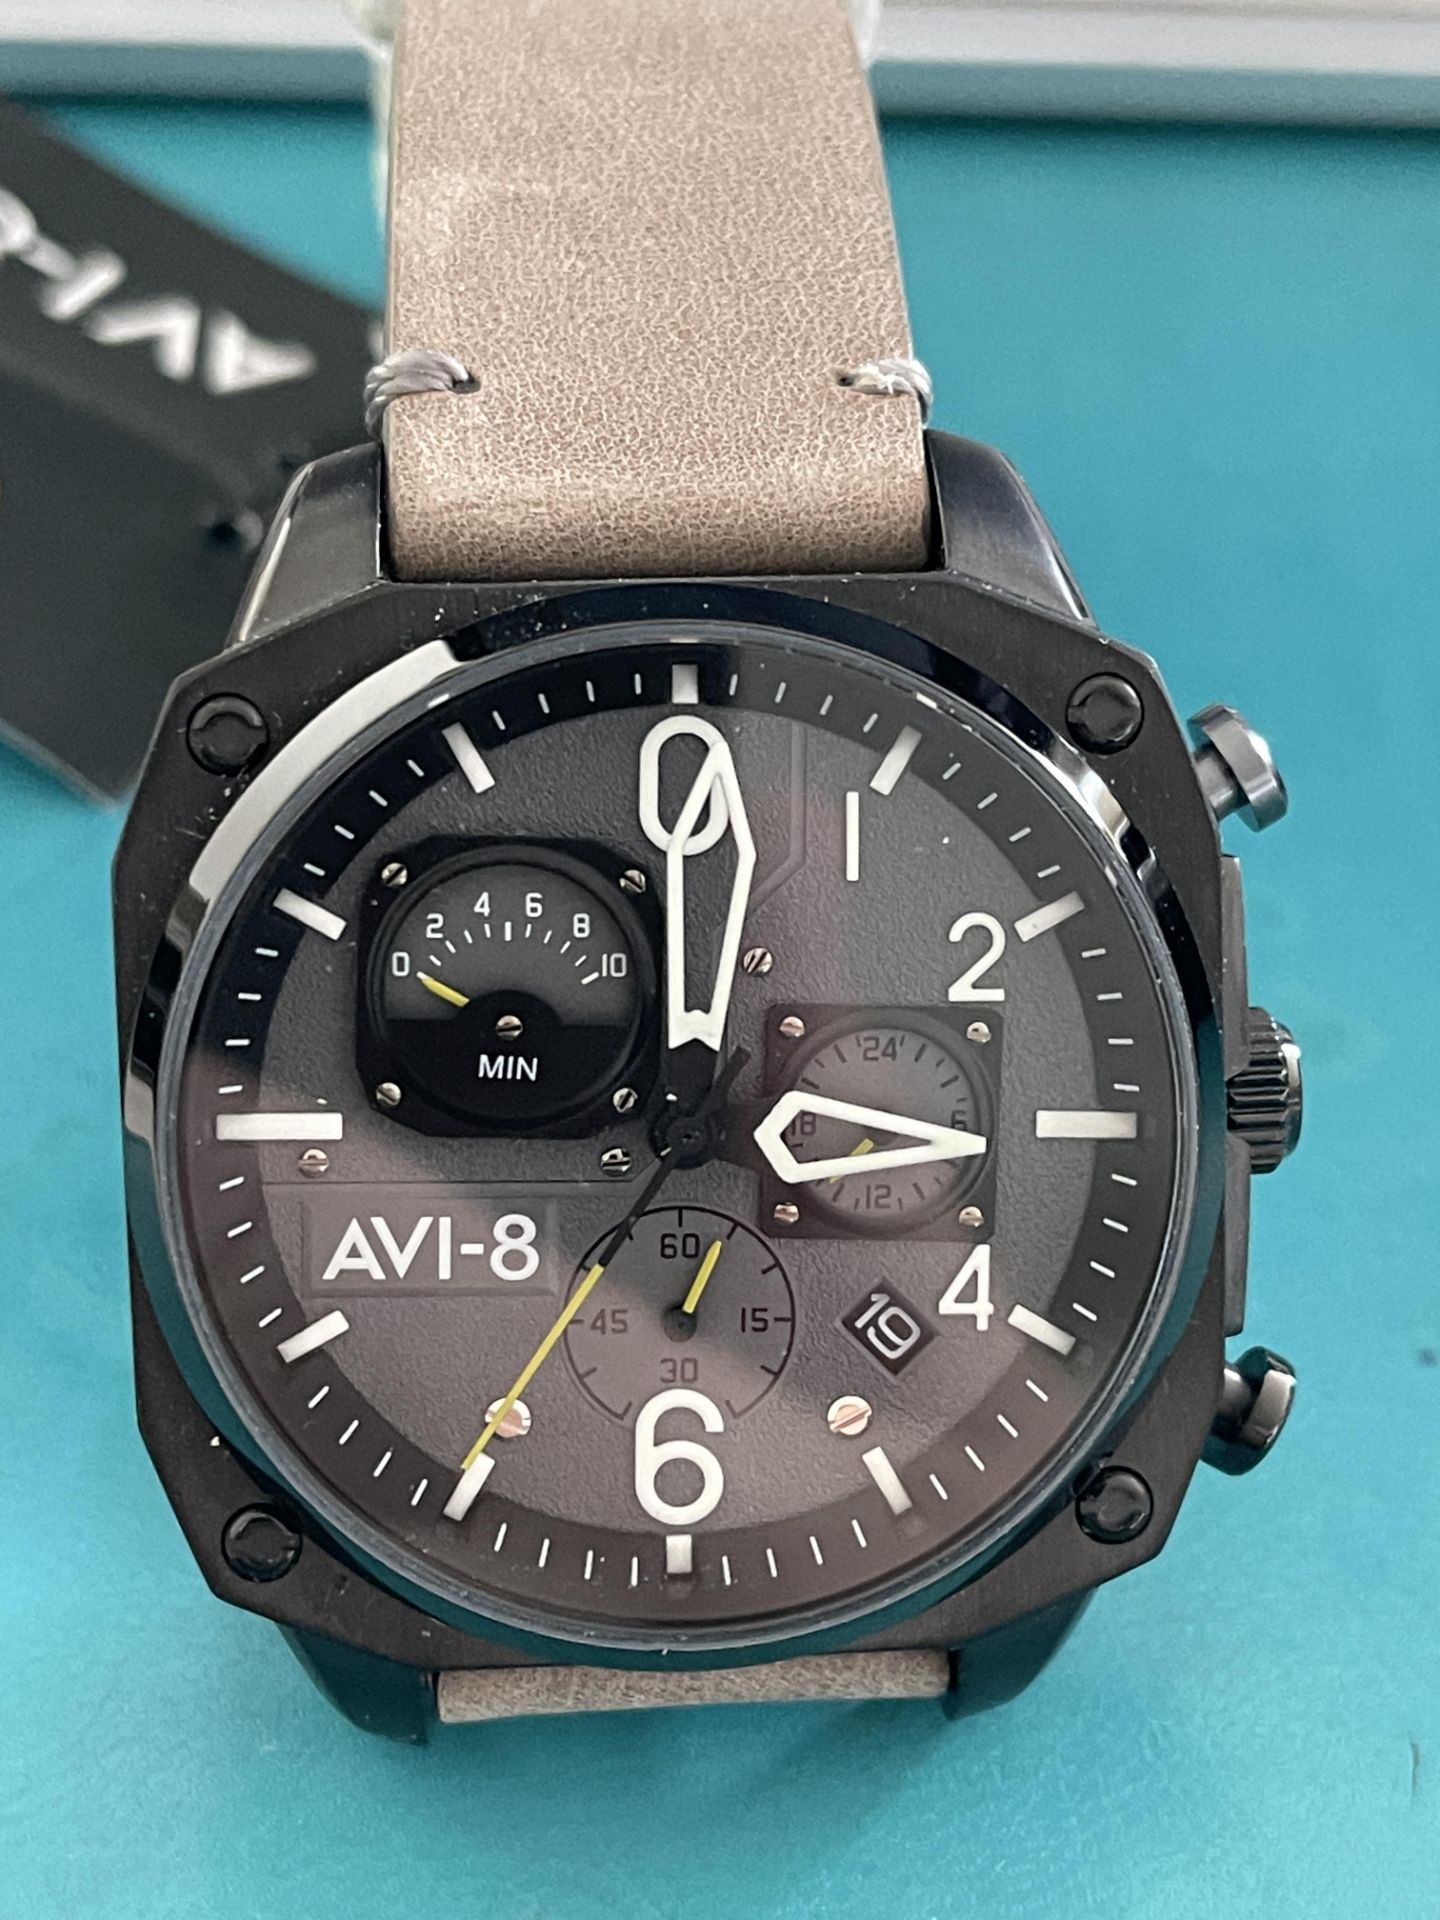 Avi-8 men's chronograph watch - Image 3 of 6